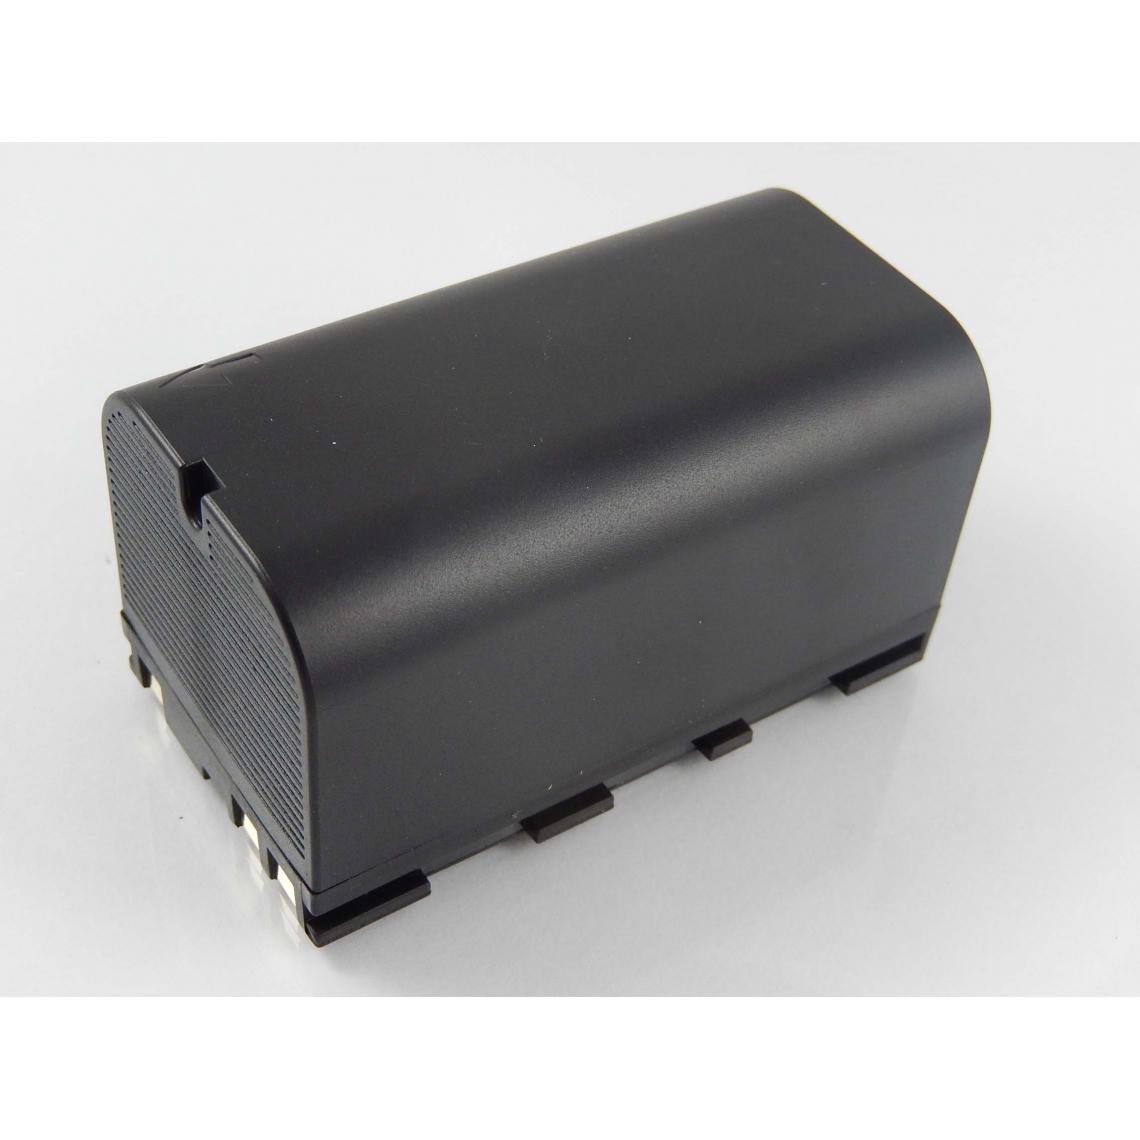 Vhbw - vhbw Batterie compatible avec Leica SR20, SR500, SR510, SR520 dispositif de mesure laser, outil de mesure (5600mAh, 7,4V, Li-ion) - Piles rechargeables